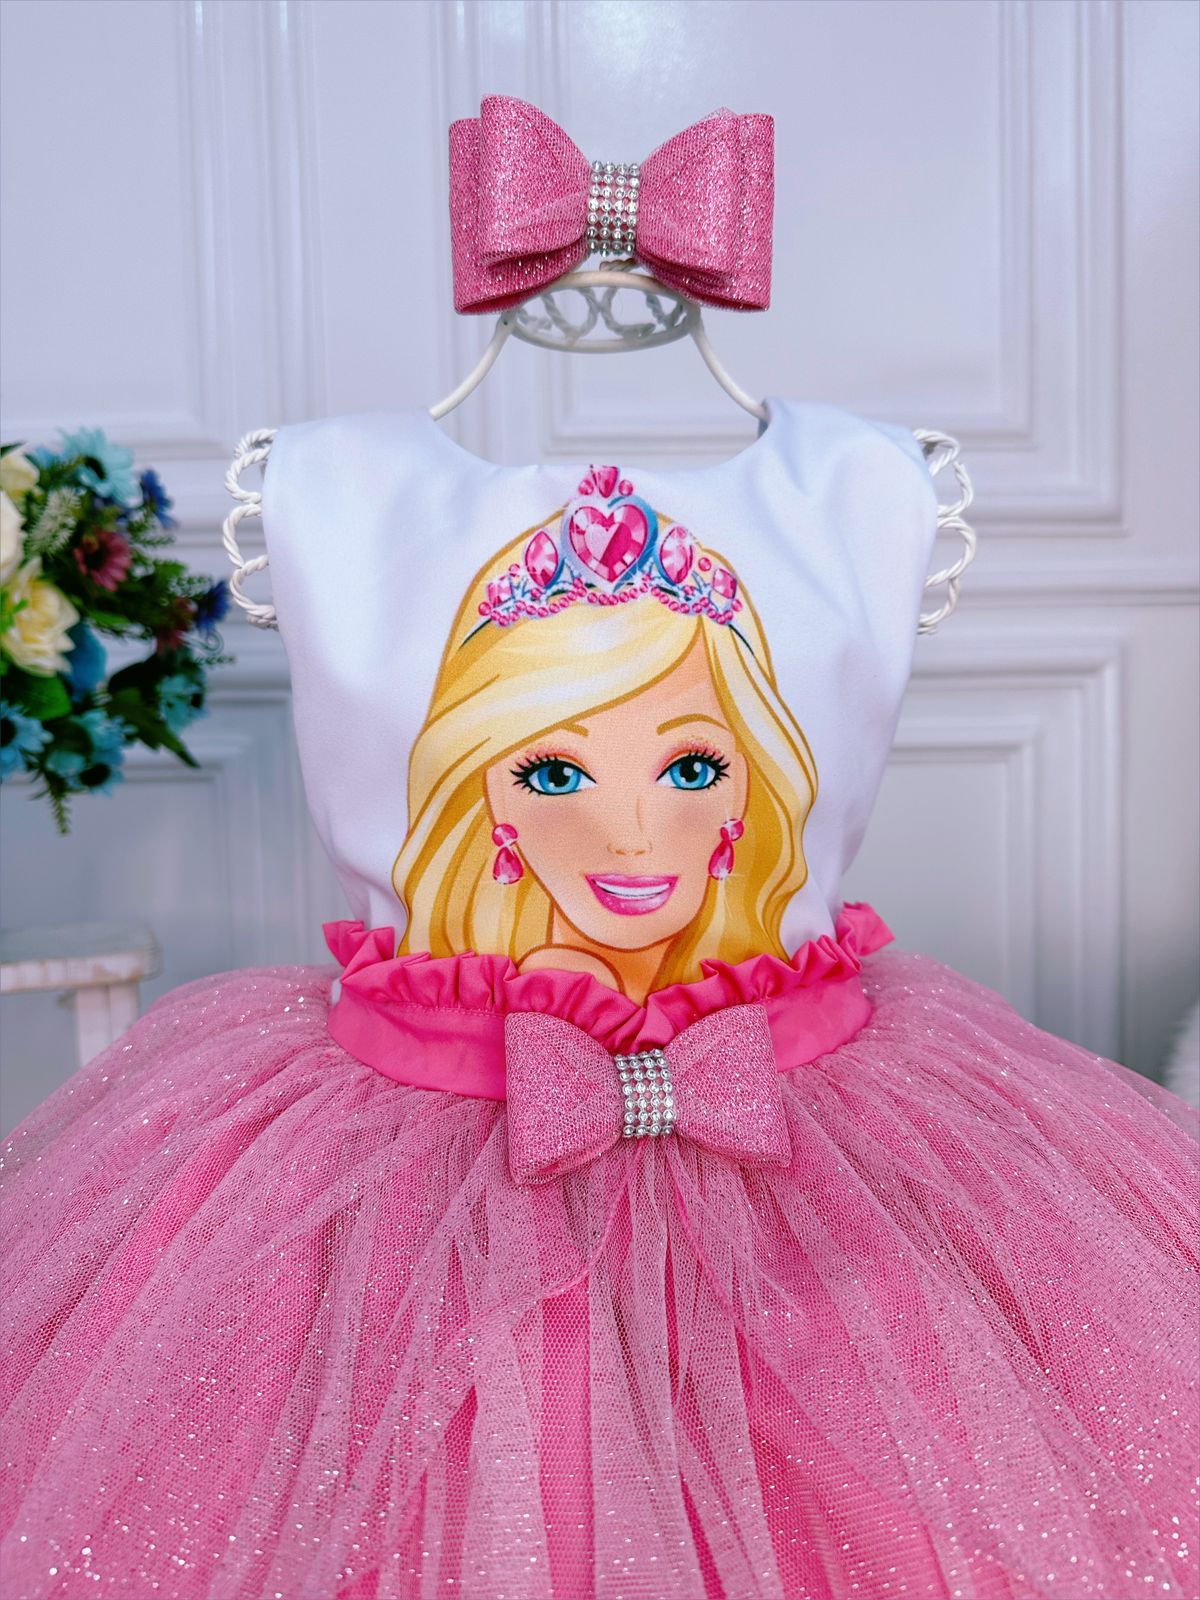 Vestido Infantil Barbie / Roupa de Menina da Barbie com Tiara, Roupa  Infantil para Menina Nunca Usado 88941184